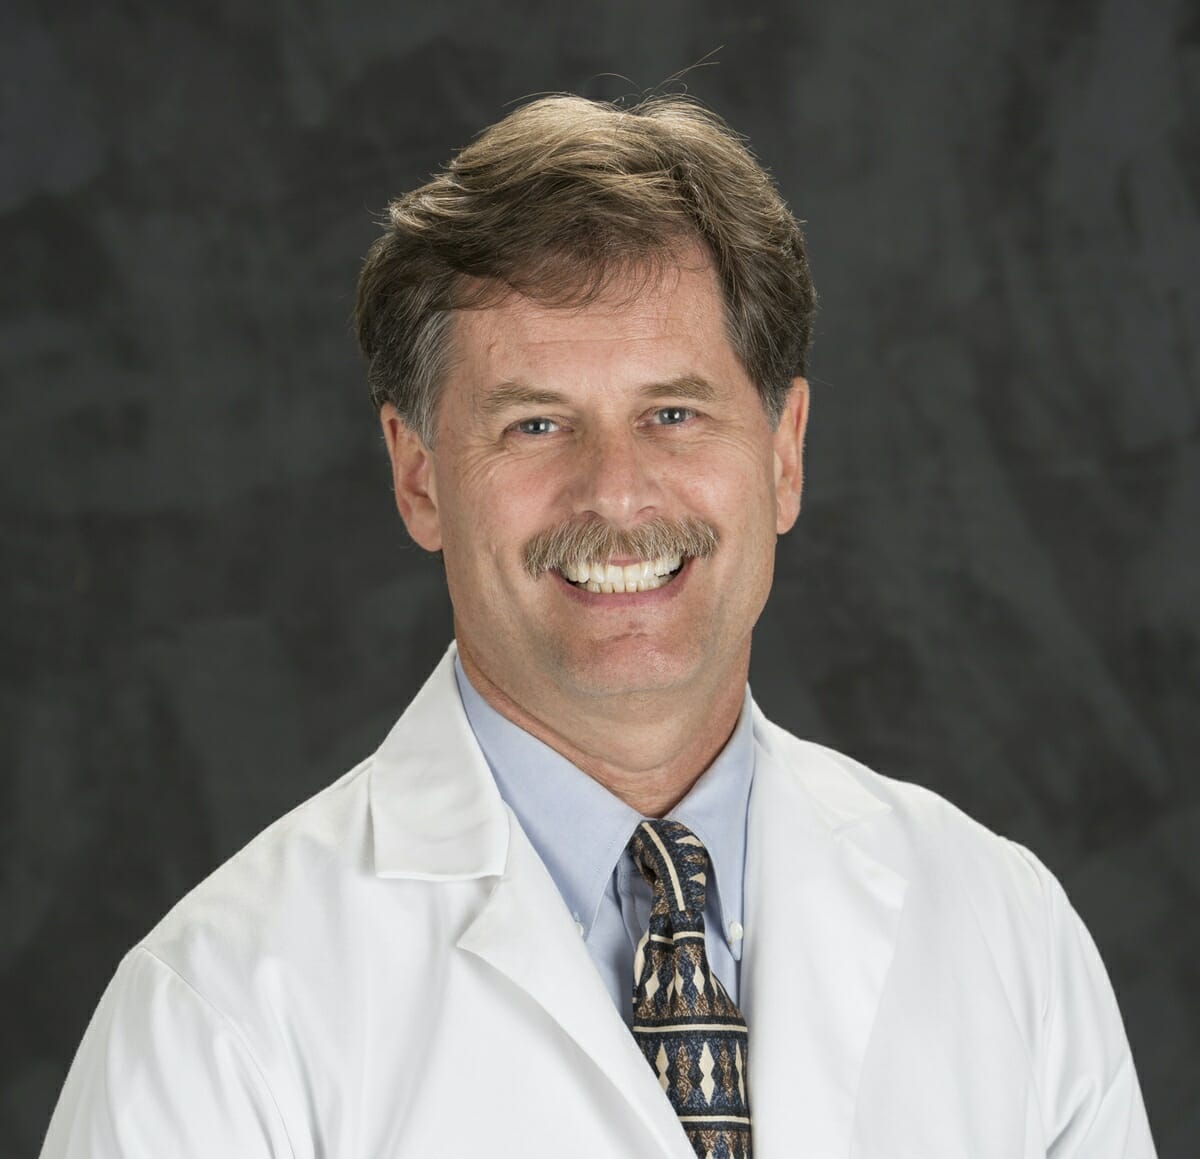 Dr. Glenn Werner - Glenn-Werner-MD-e1440072471979